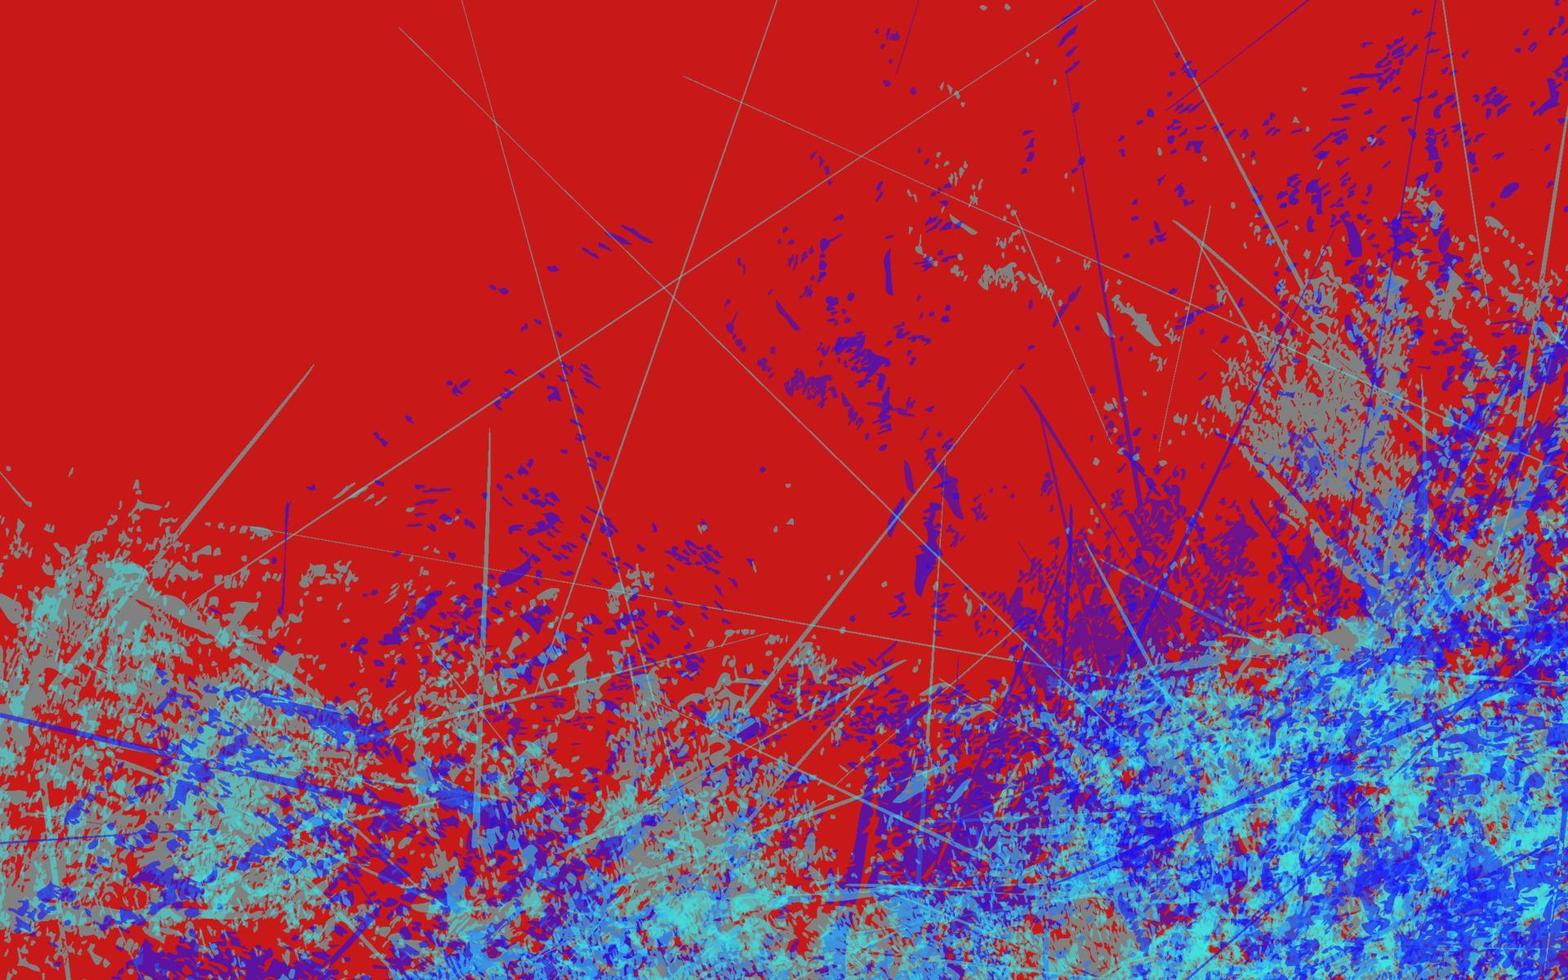 abstrakte Grunge-Textur roter Hintergrundvektor vektor